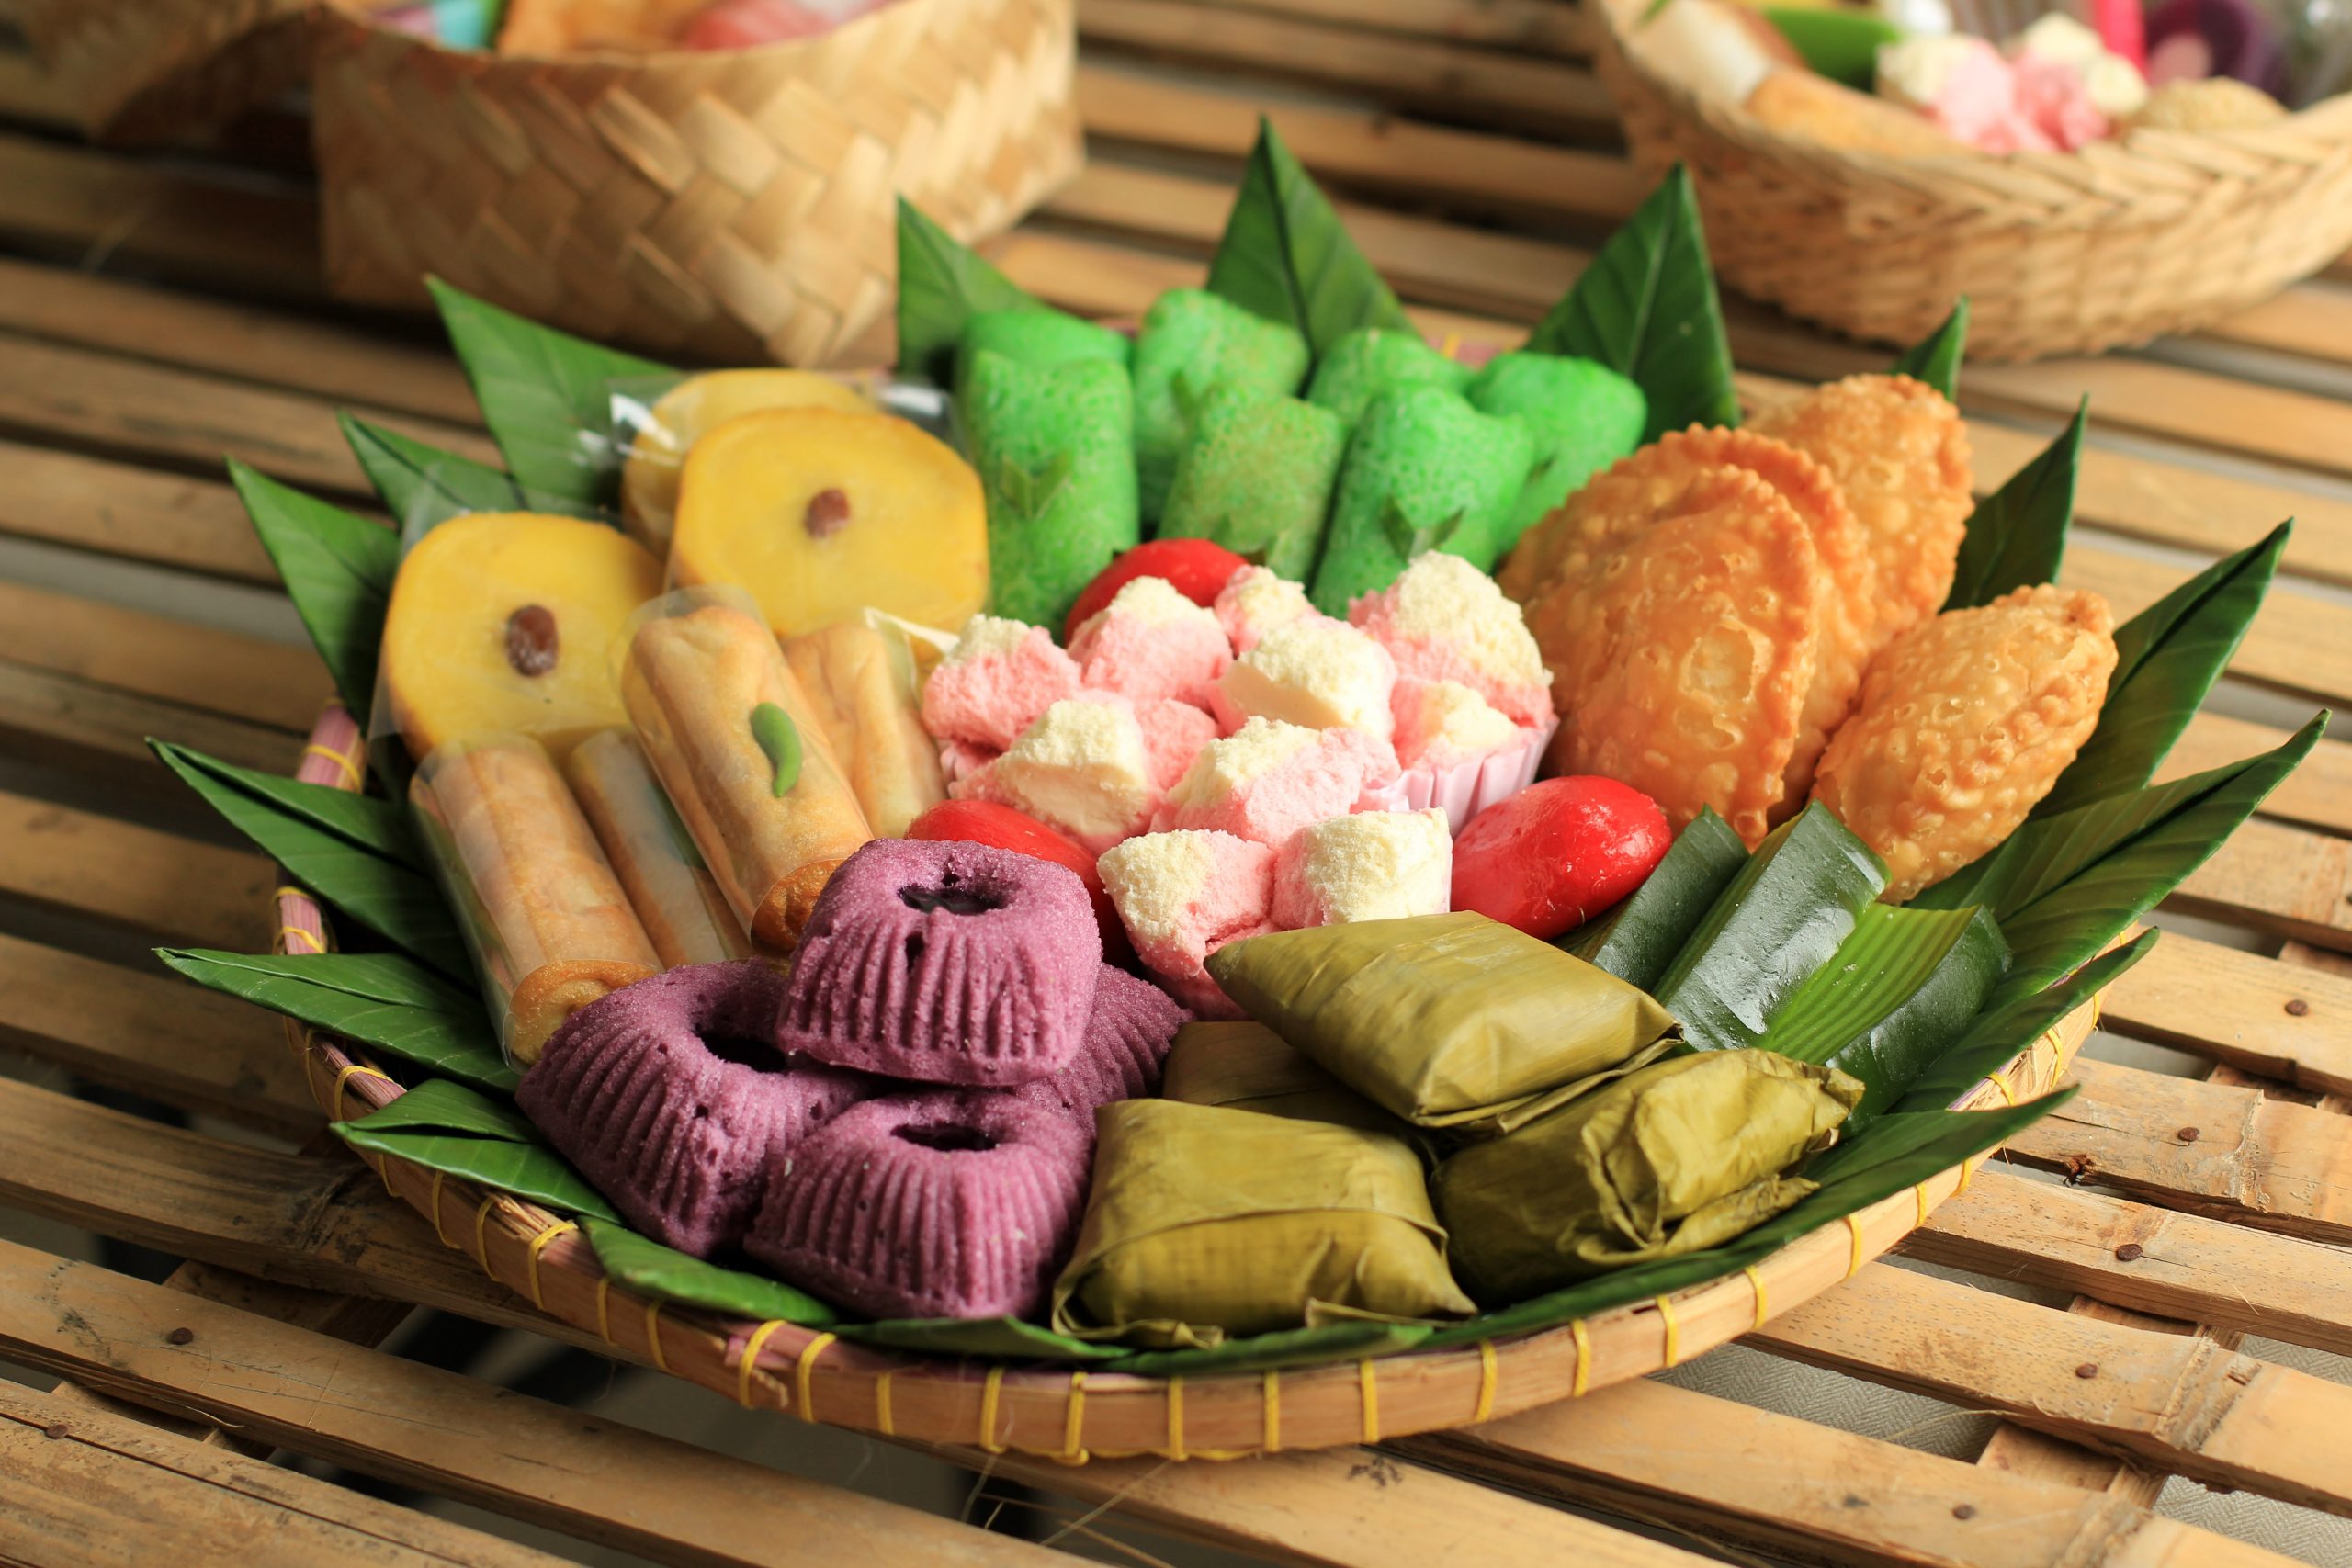 indonesian market snacks